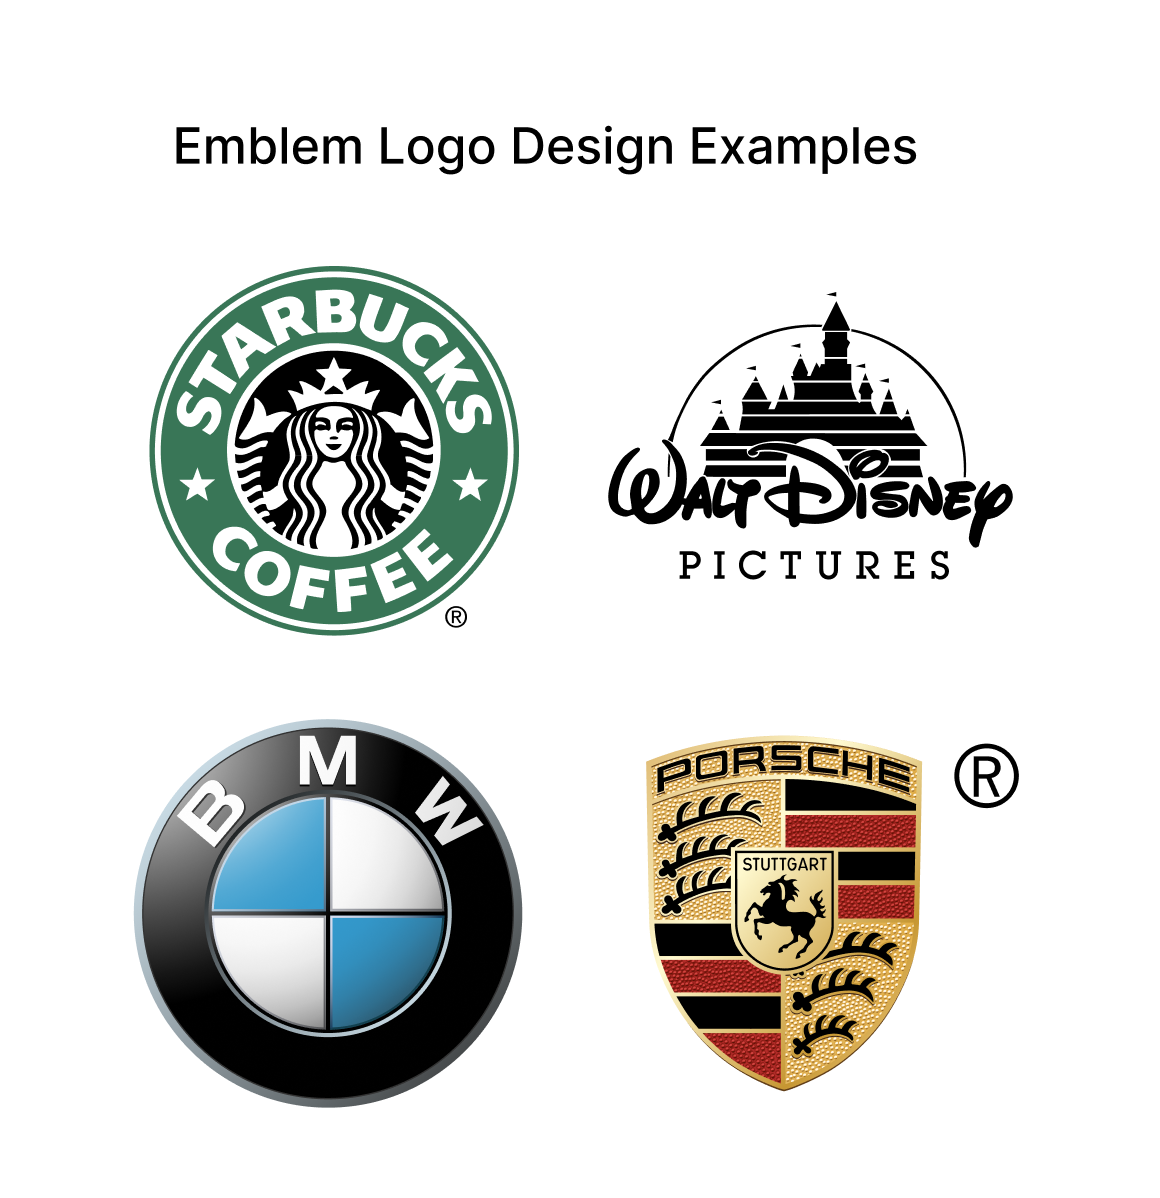 How to Check a Logo: Seven Criteria of a Poor-Quality Emblem | ZenBusiness